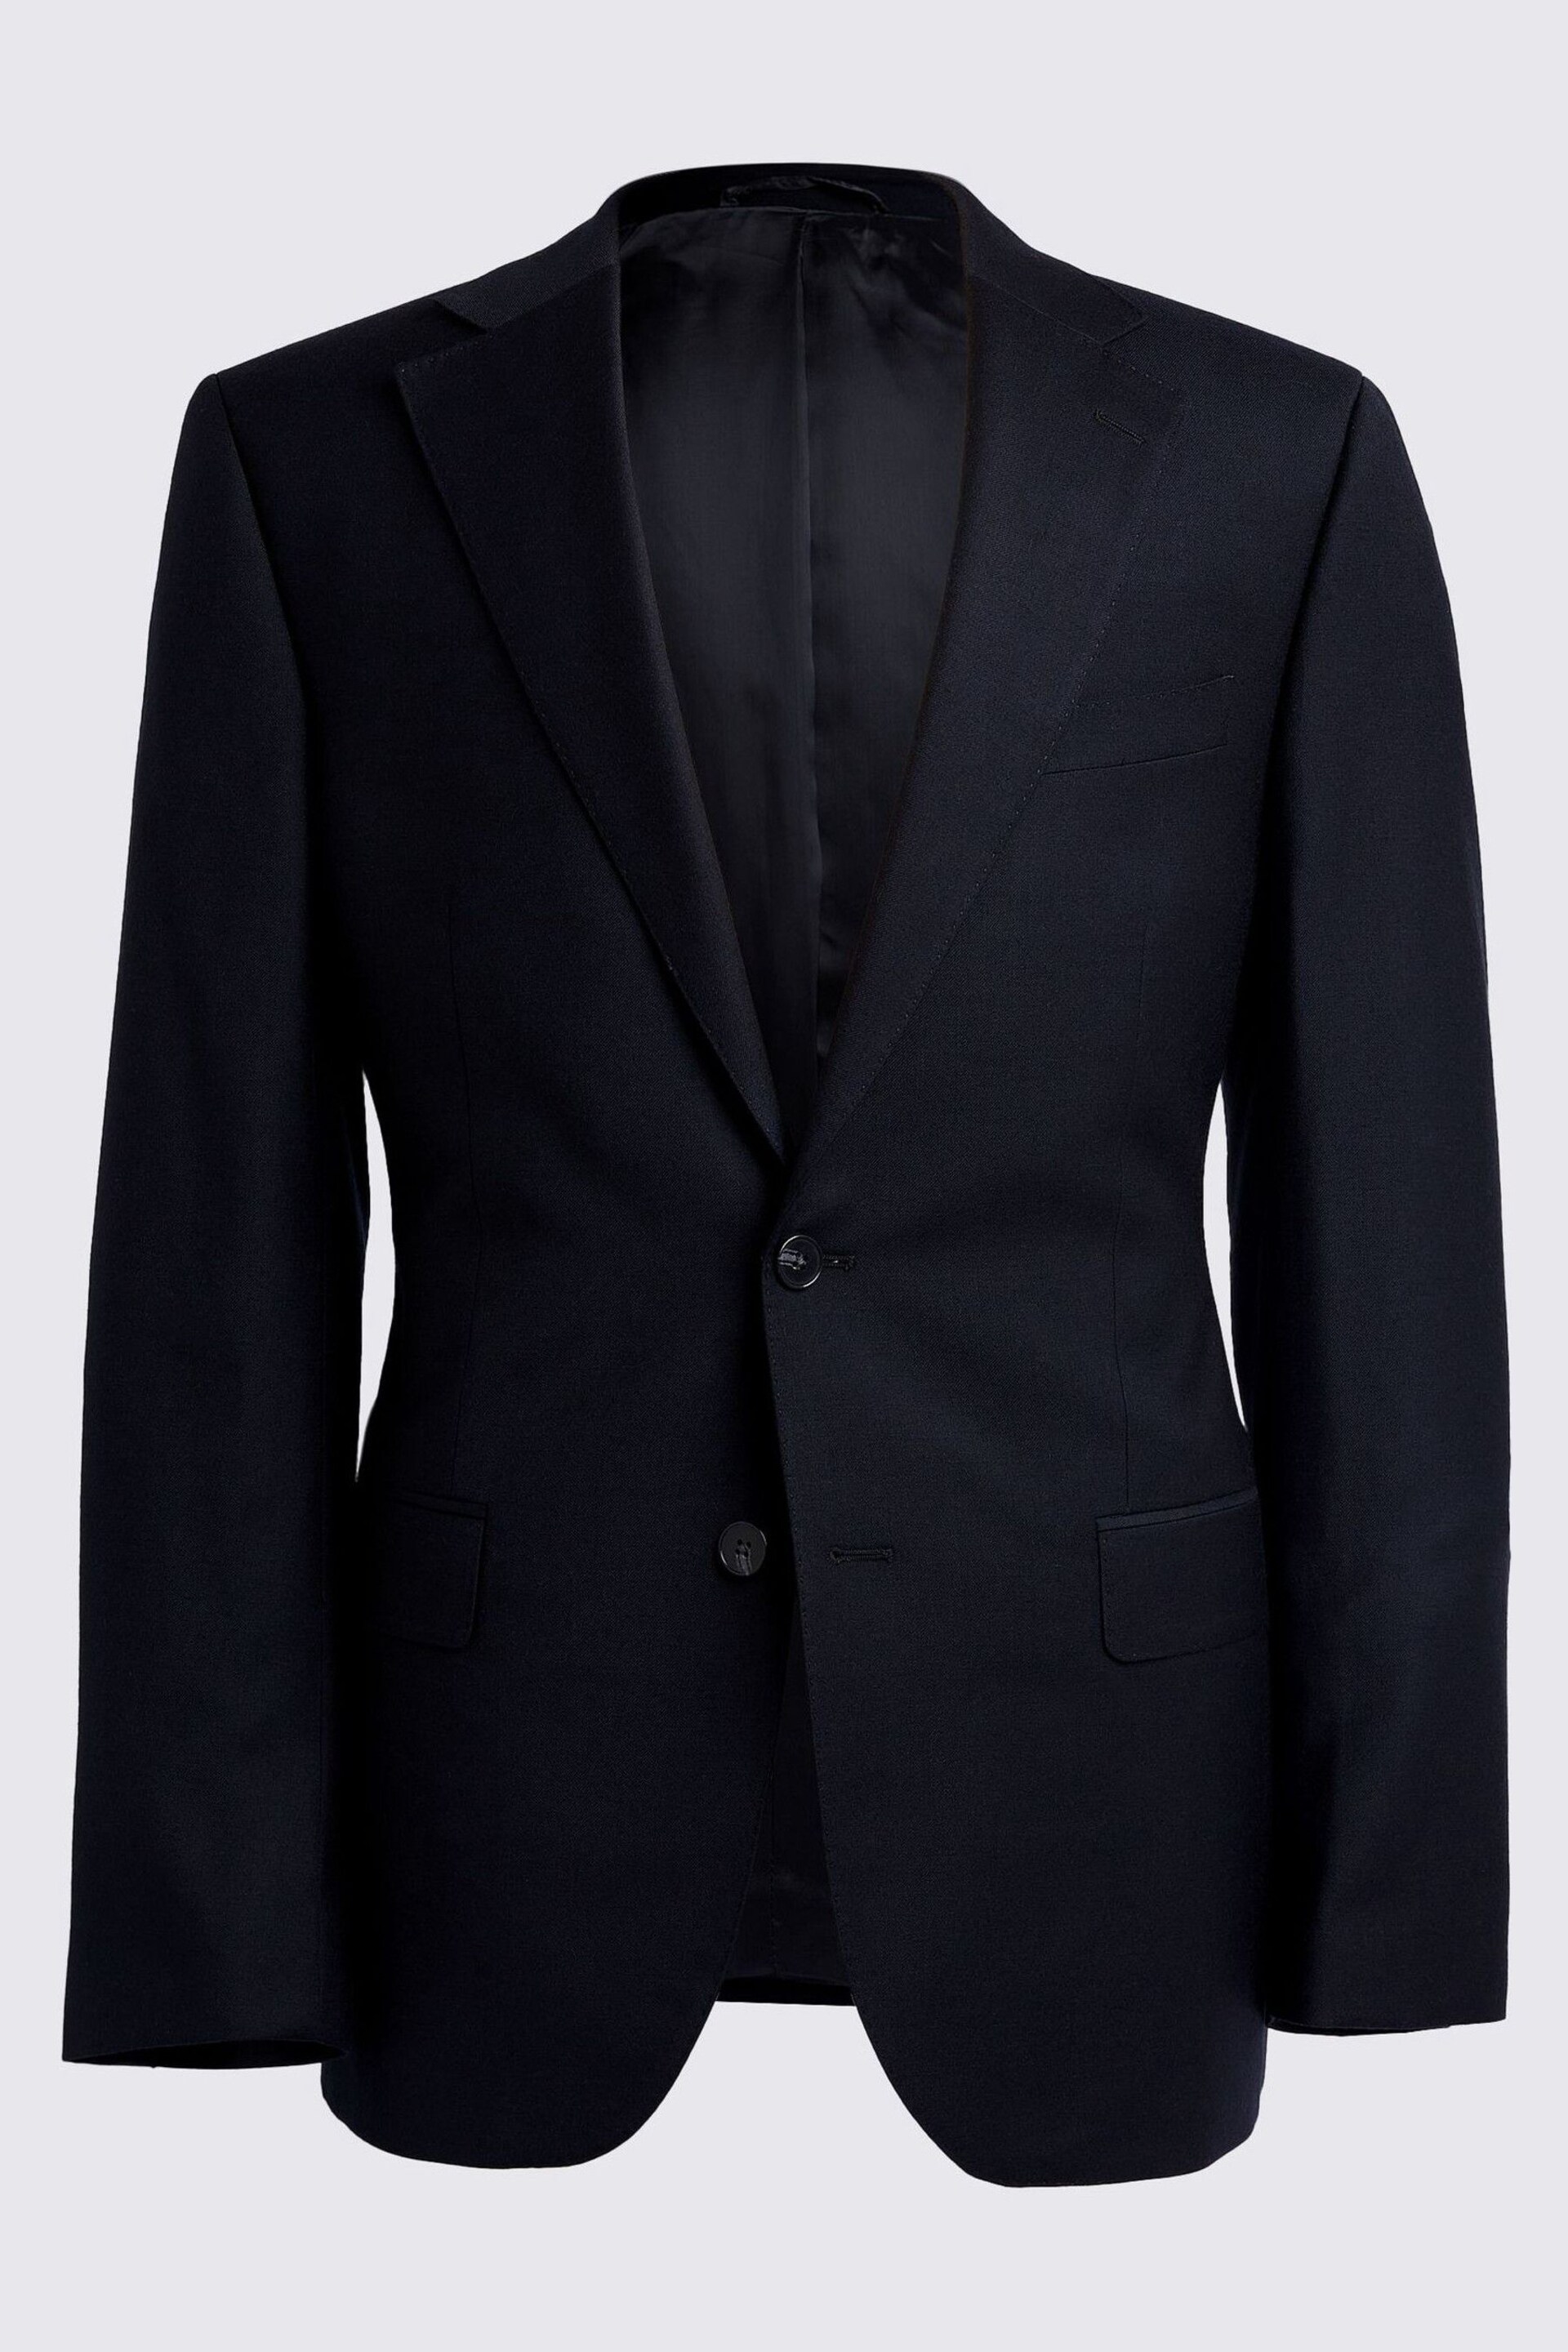 MOSS Black Regular Fit Twill Jacket - Image 8 of 8